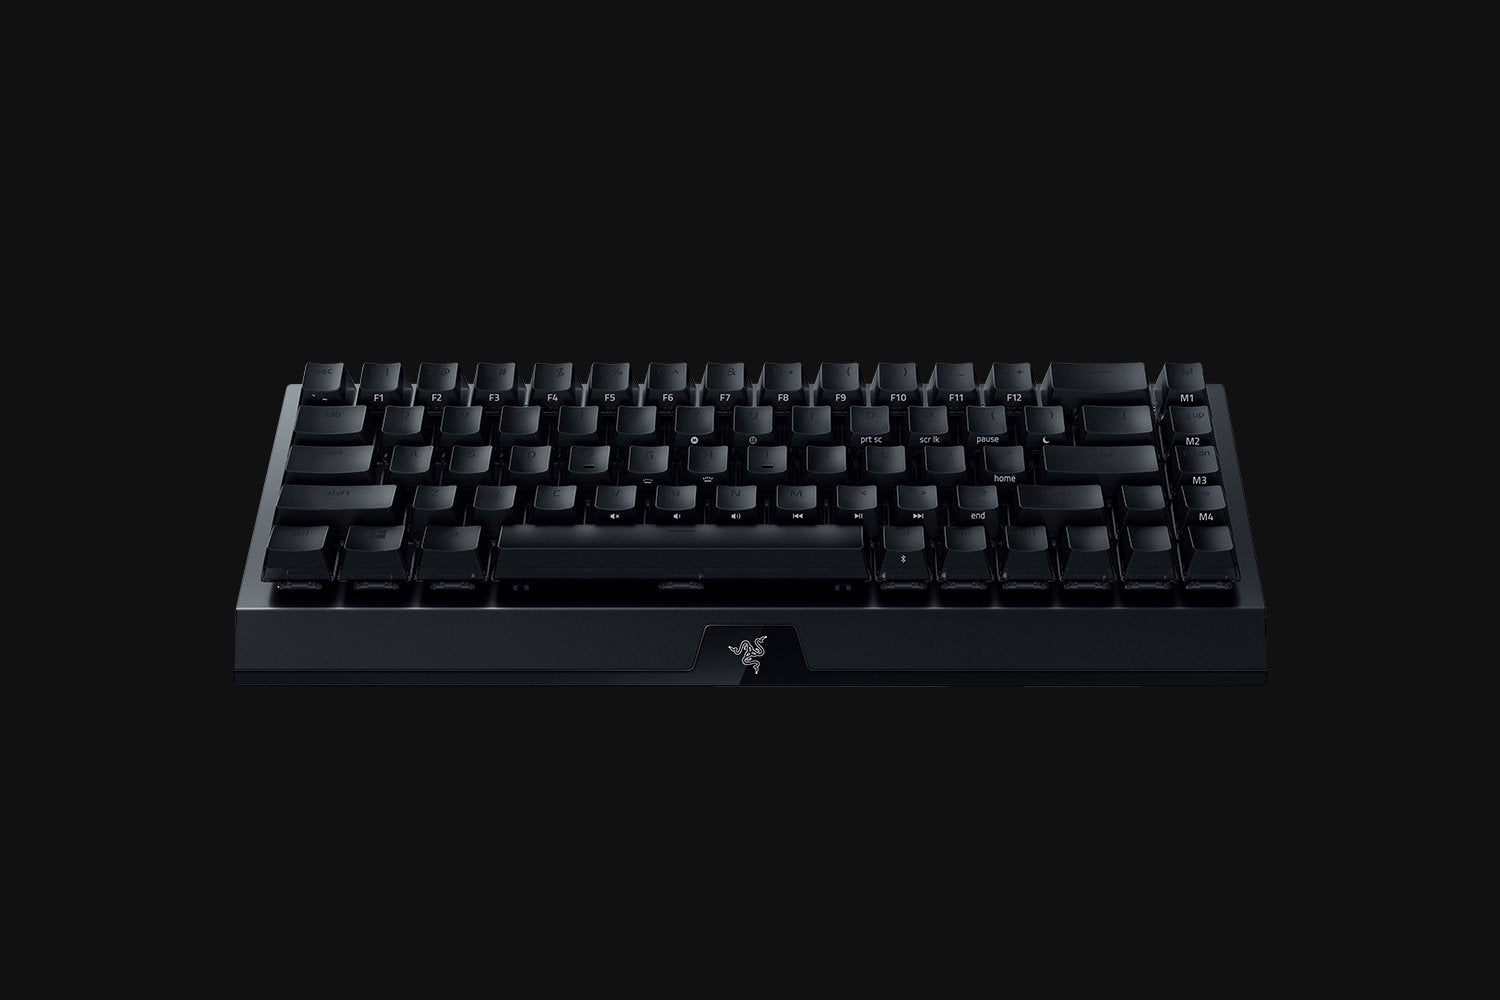 Razer BlackWidow V3 Mini HyperSpeed - Phantom Edition - 65% Wireless Mechanical Gaming Keyboard